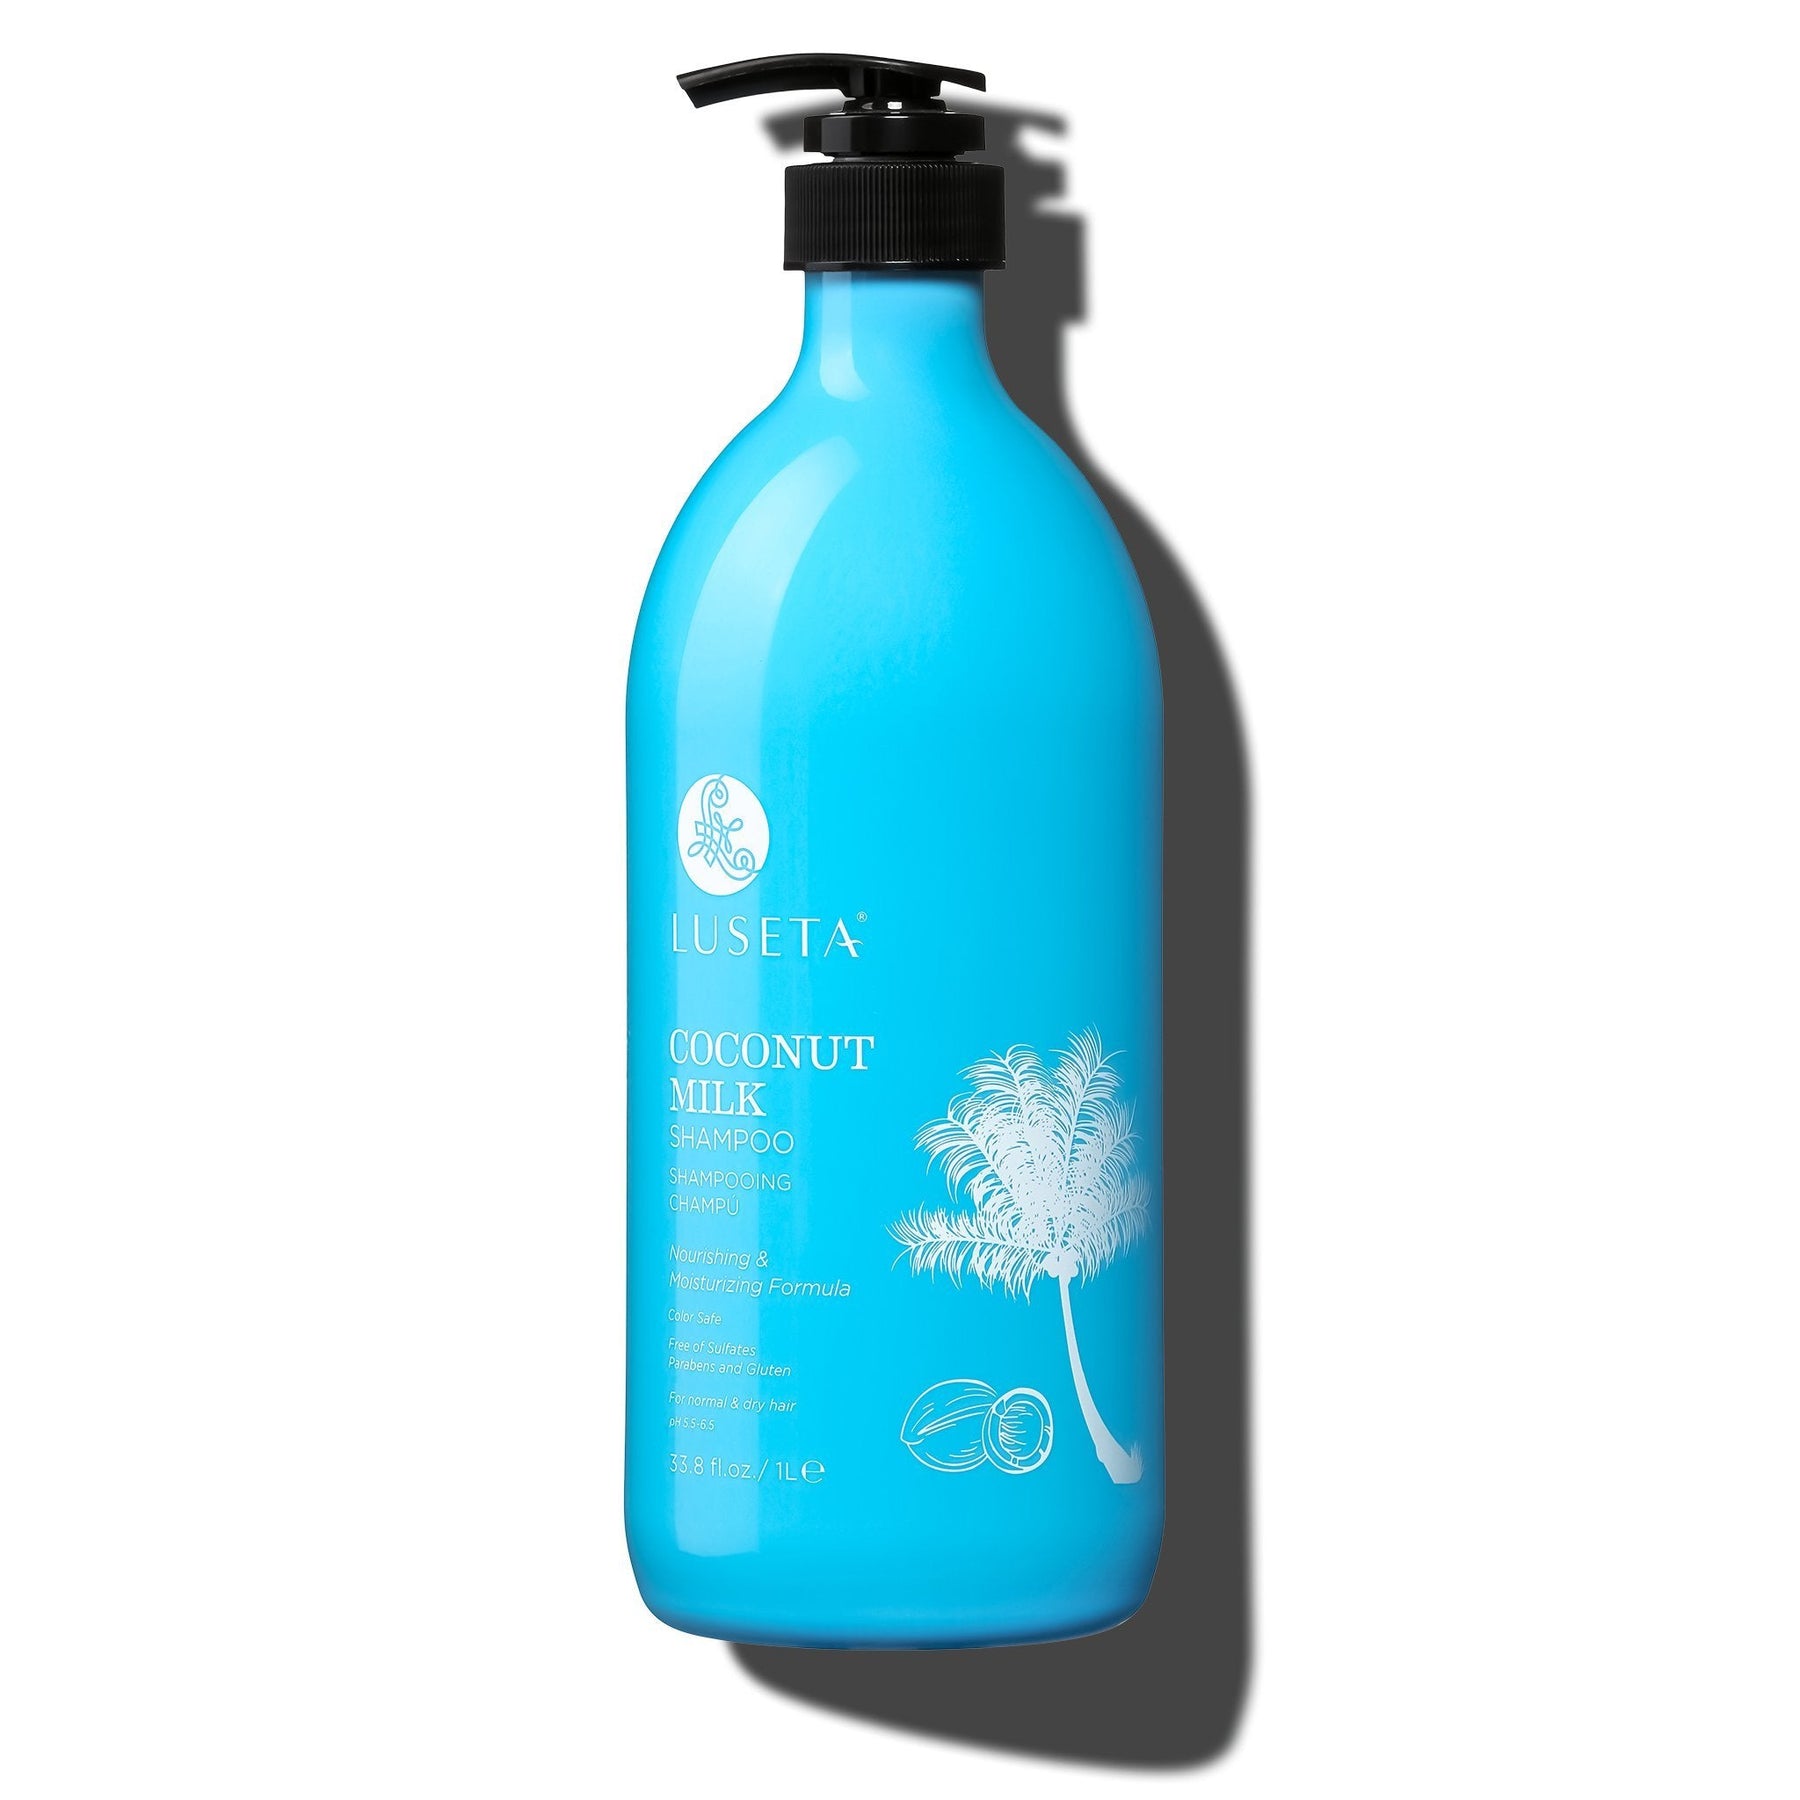 Coconut Milk Shampoo - 33.8oz - by Luseta Beauty |ProCare Outlet|